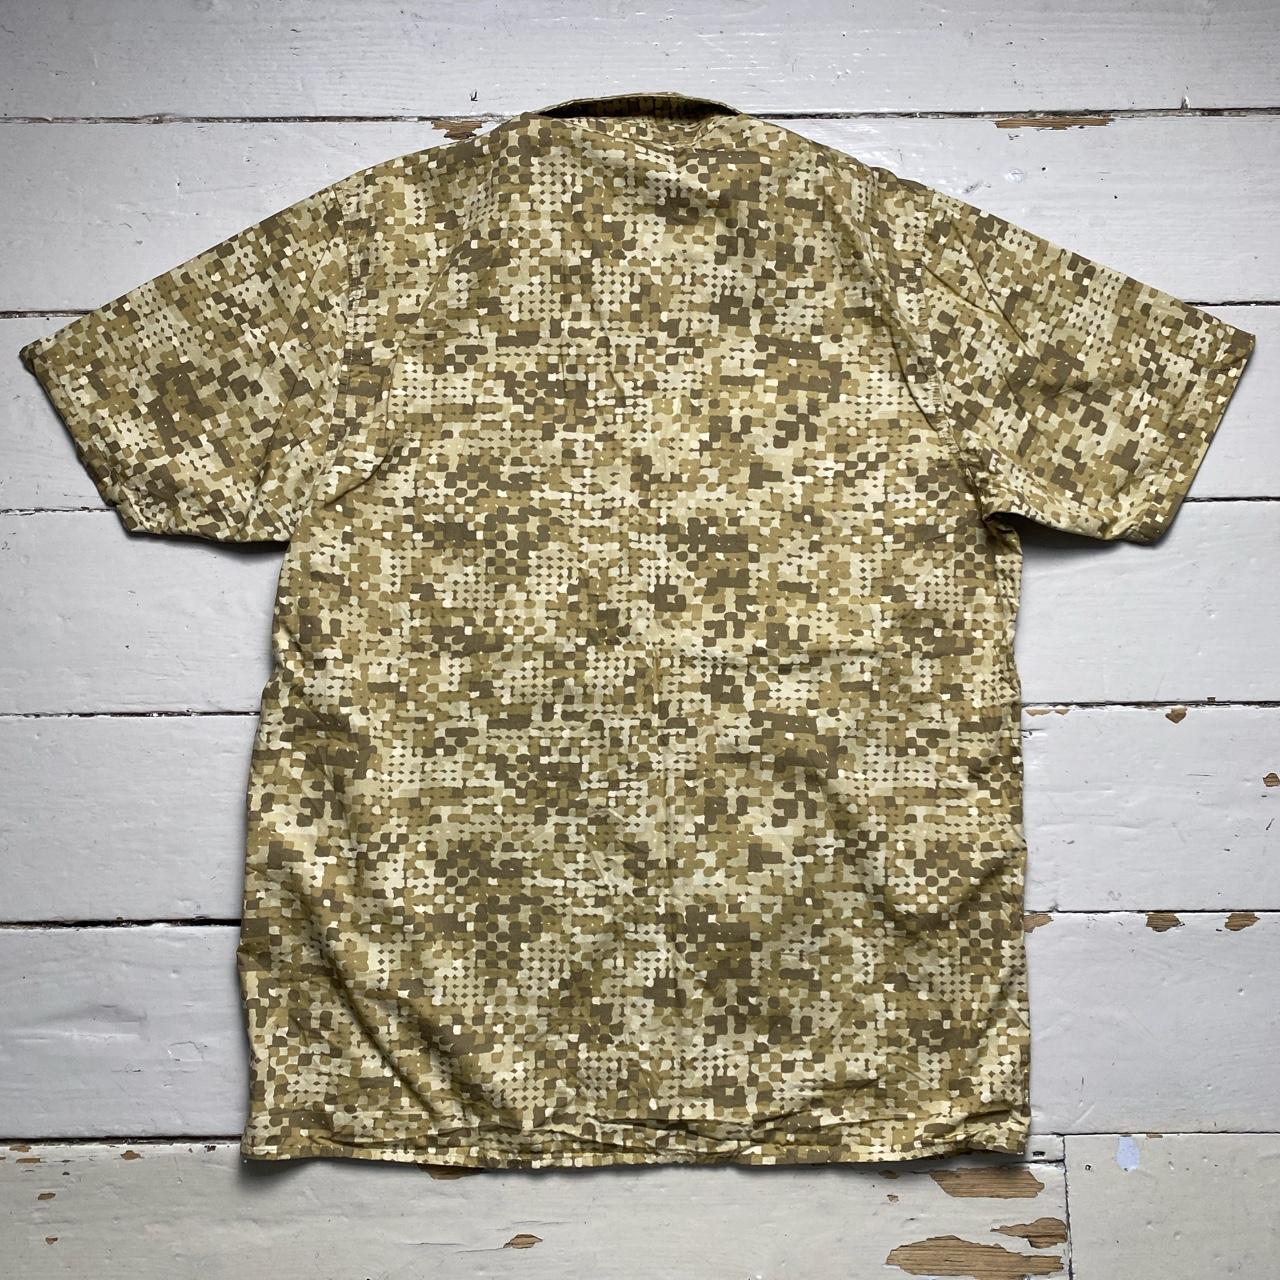 Carhartt Military Camouflage Beige Khaki Short Sleeve Shirt